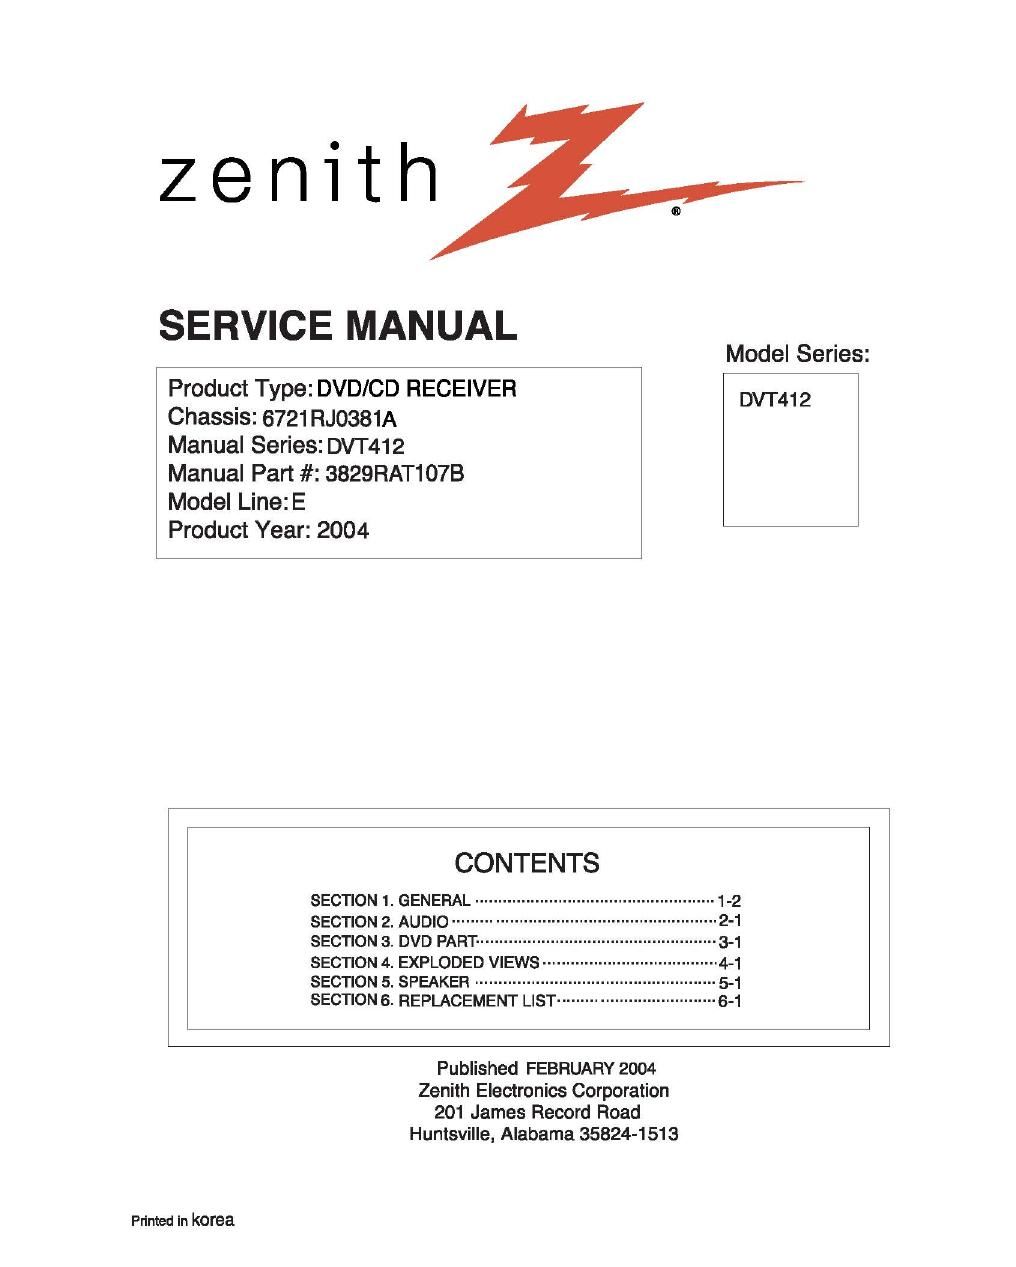 zenith dvt 412 service en